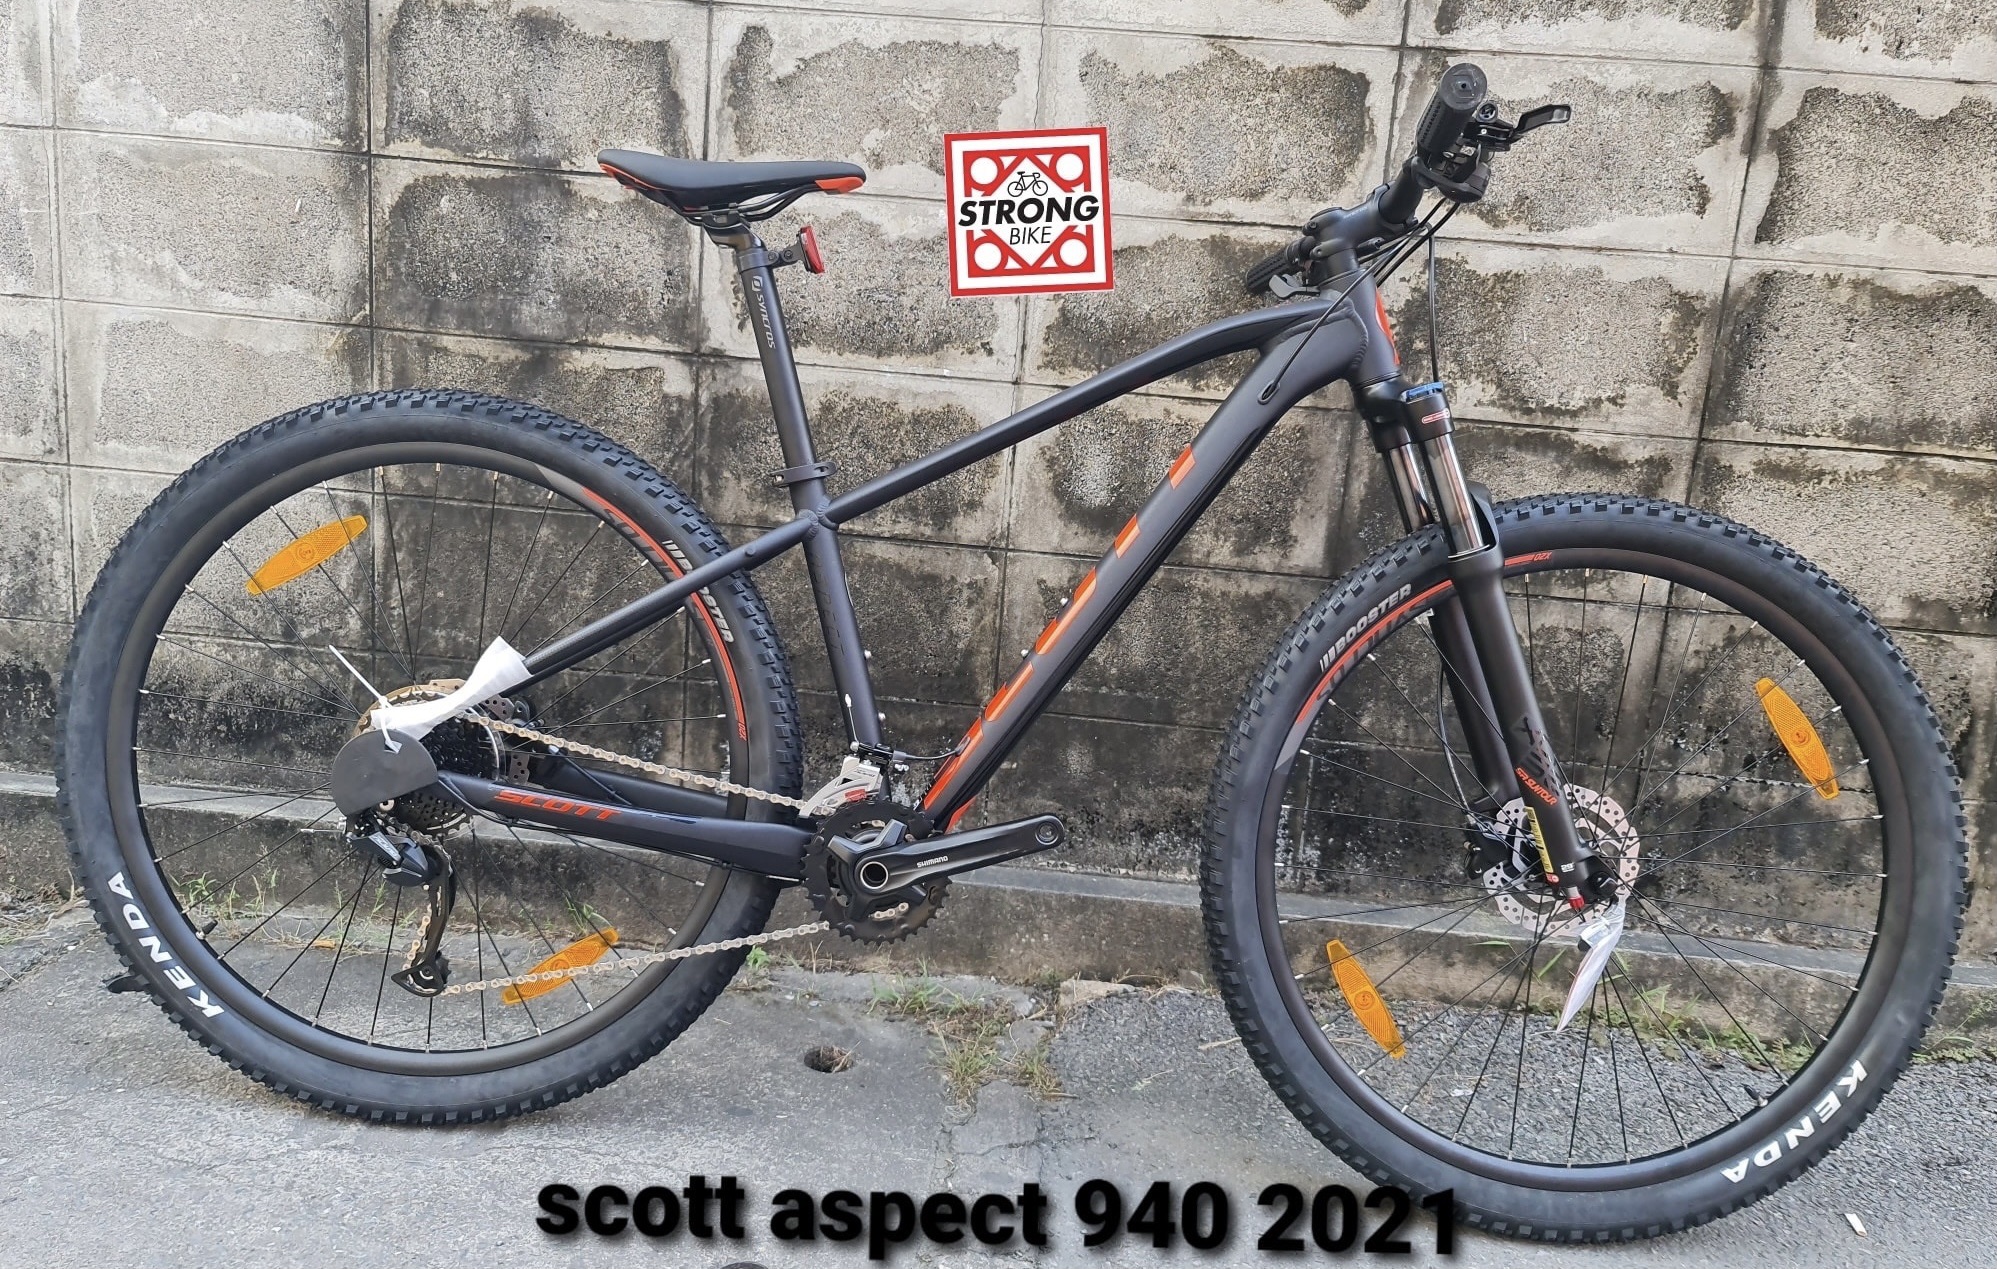 Scott aspect 940 2021 มี size S ,M,L